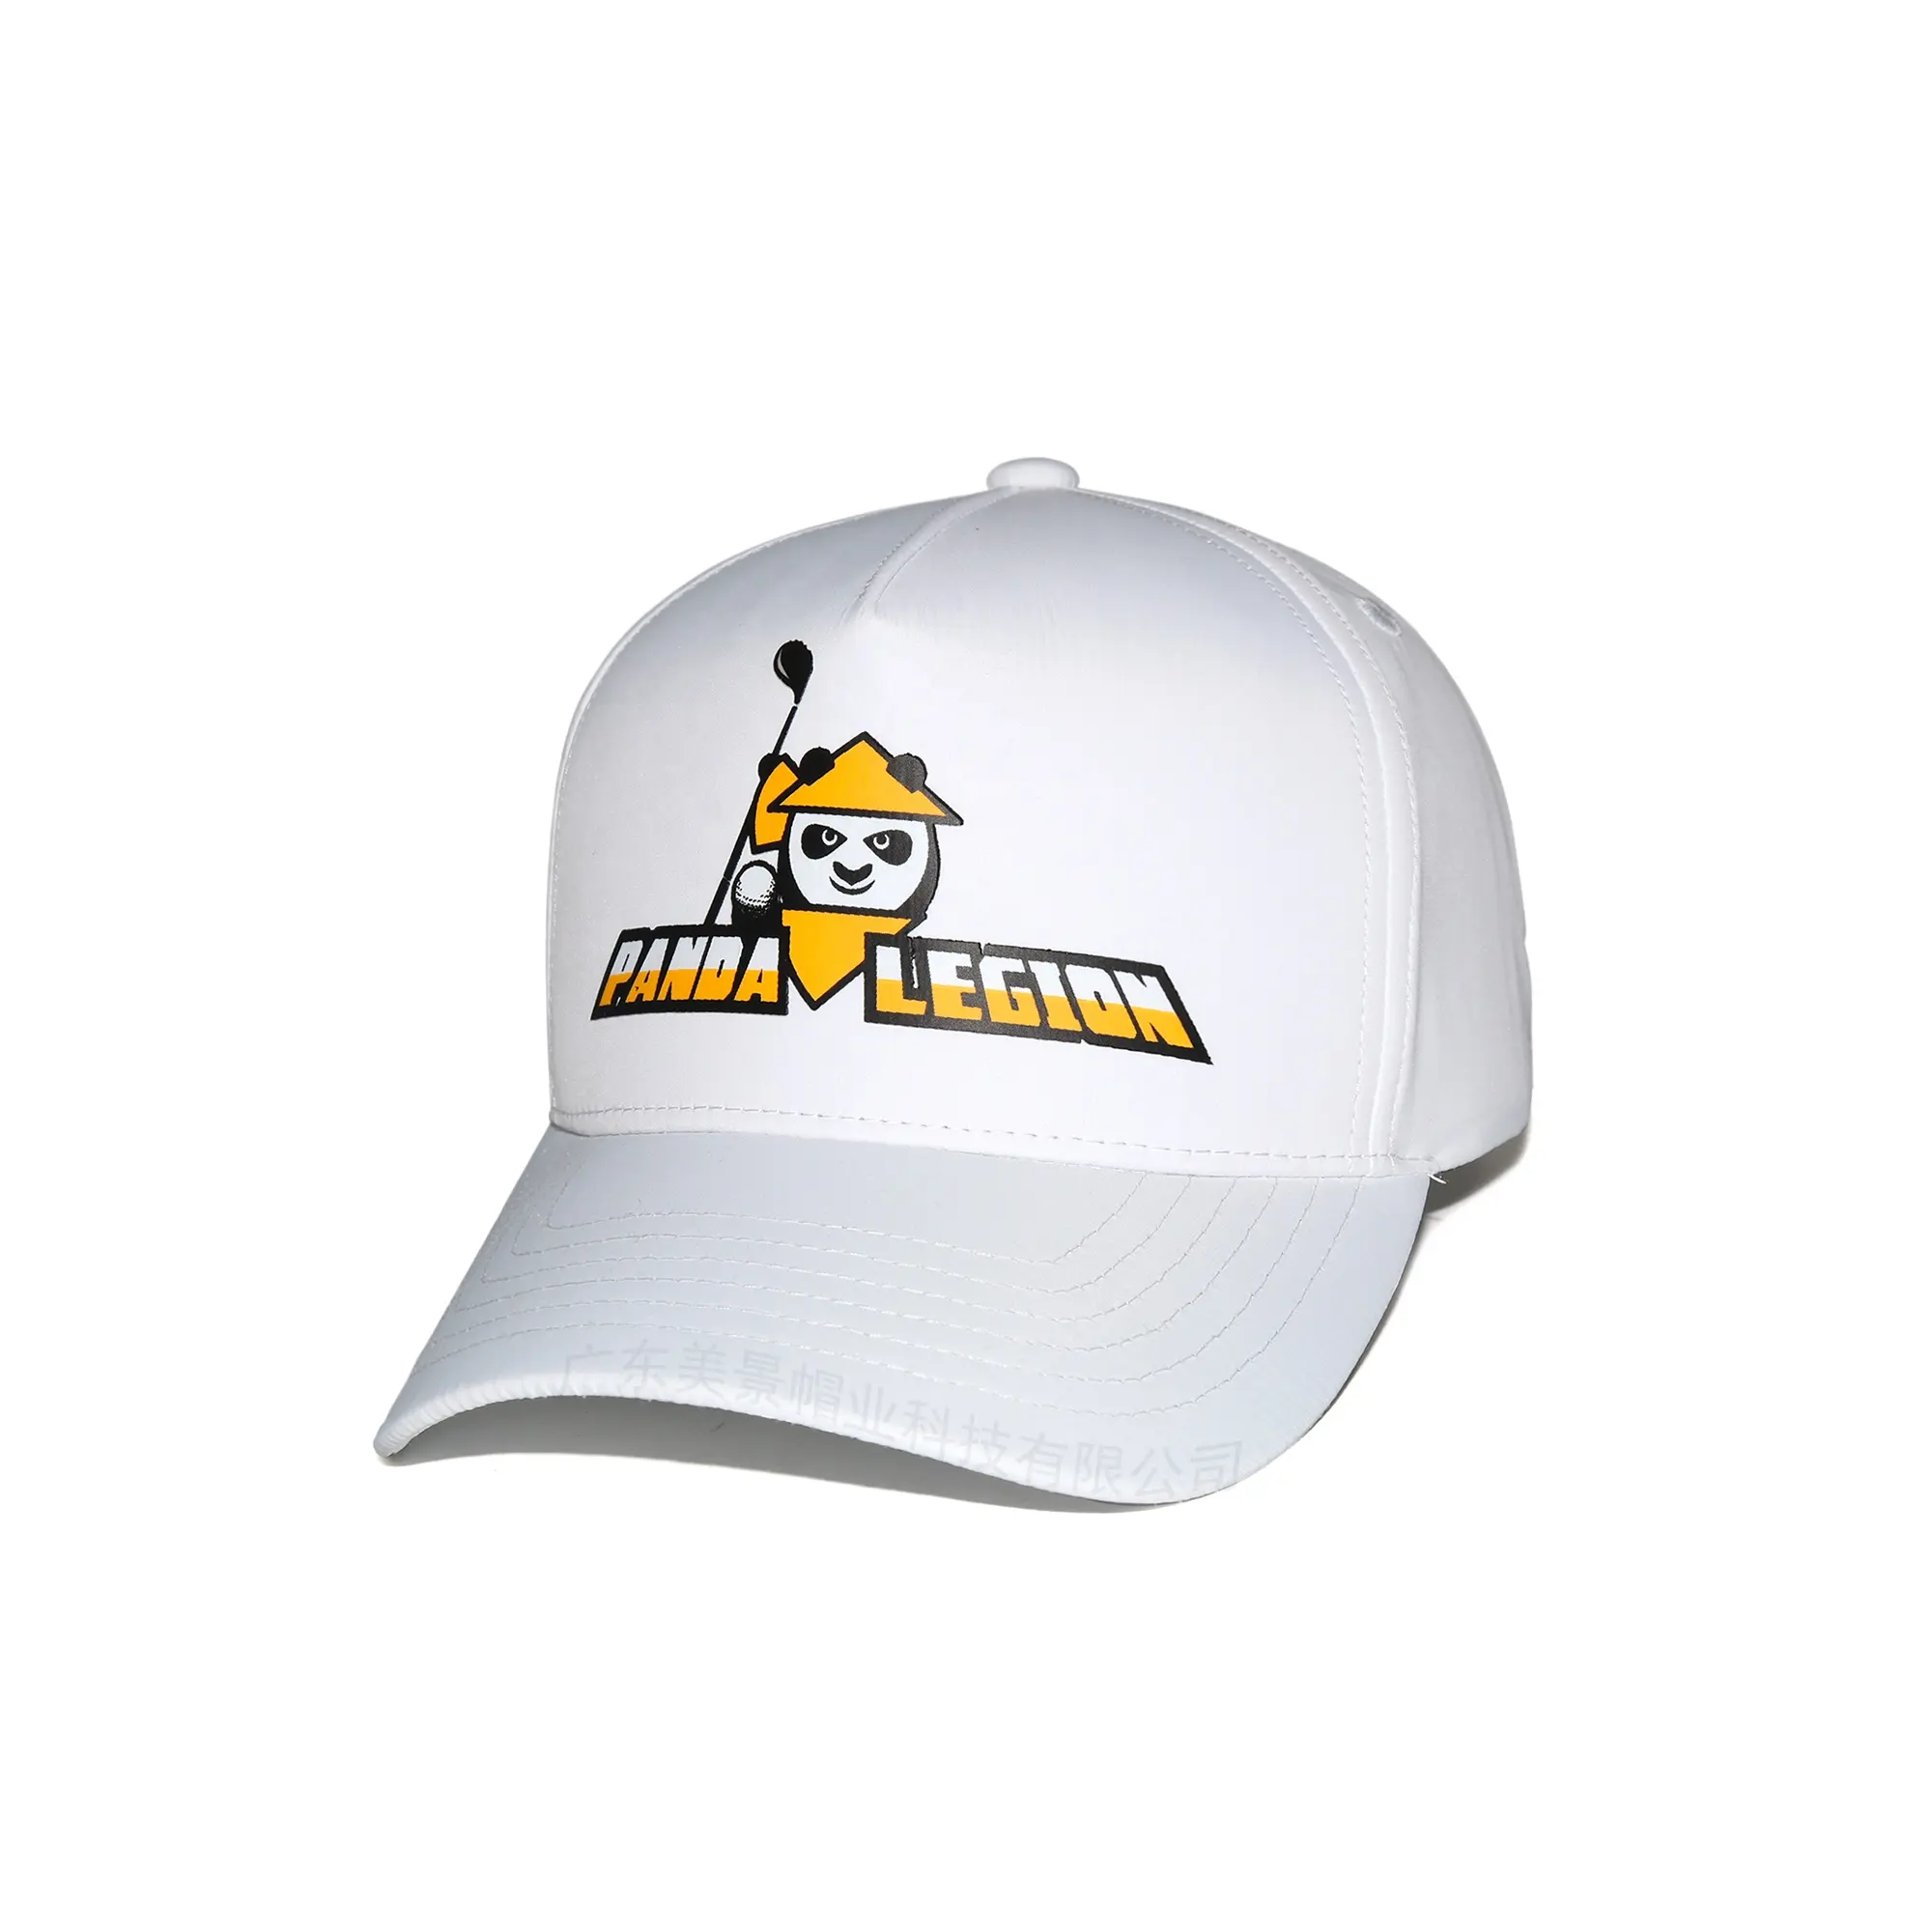 Customized high crown curved brim 5 panel baseball cap quick dry running sports caps printed panda high quality golf hats